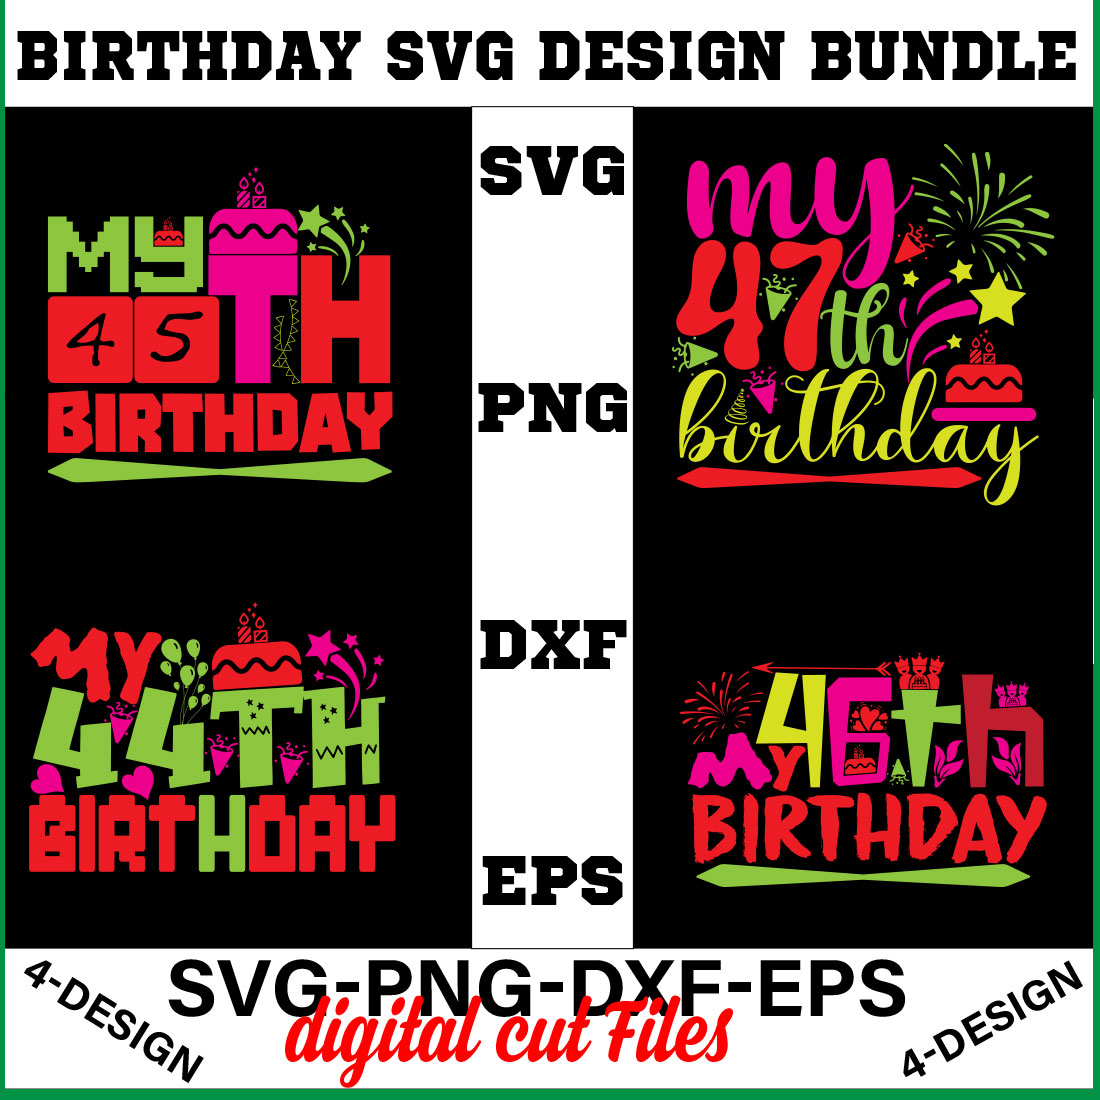 birthday svg design bundle Happy birthday svg bundle hand lettered birthday svg birthday party svg Volume-12 cover image.